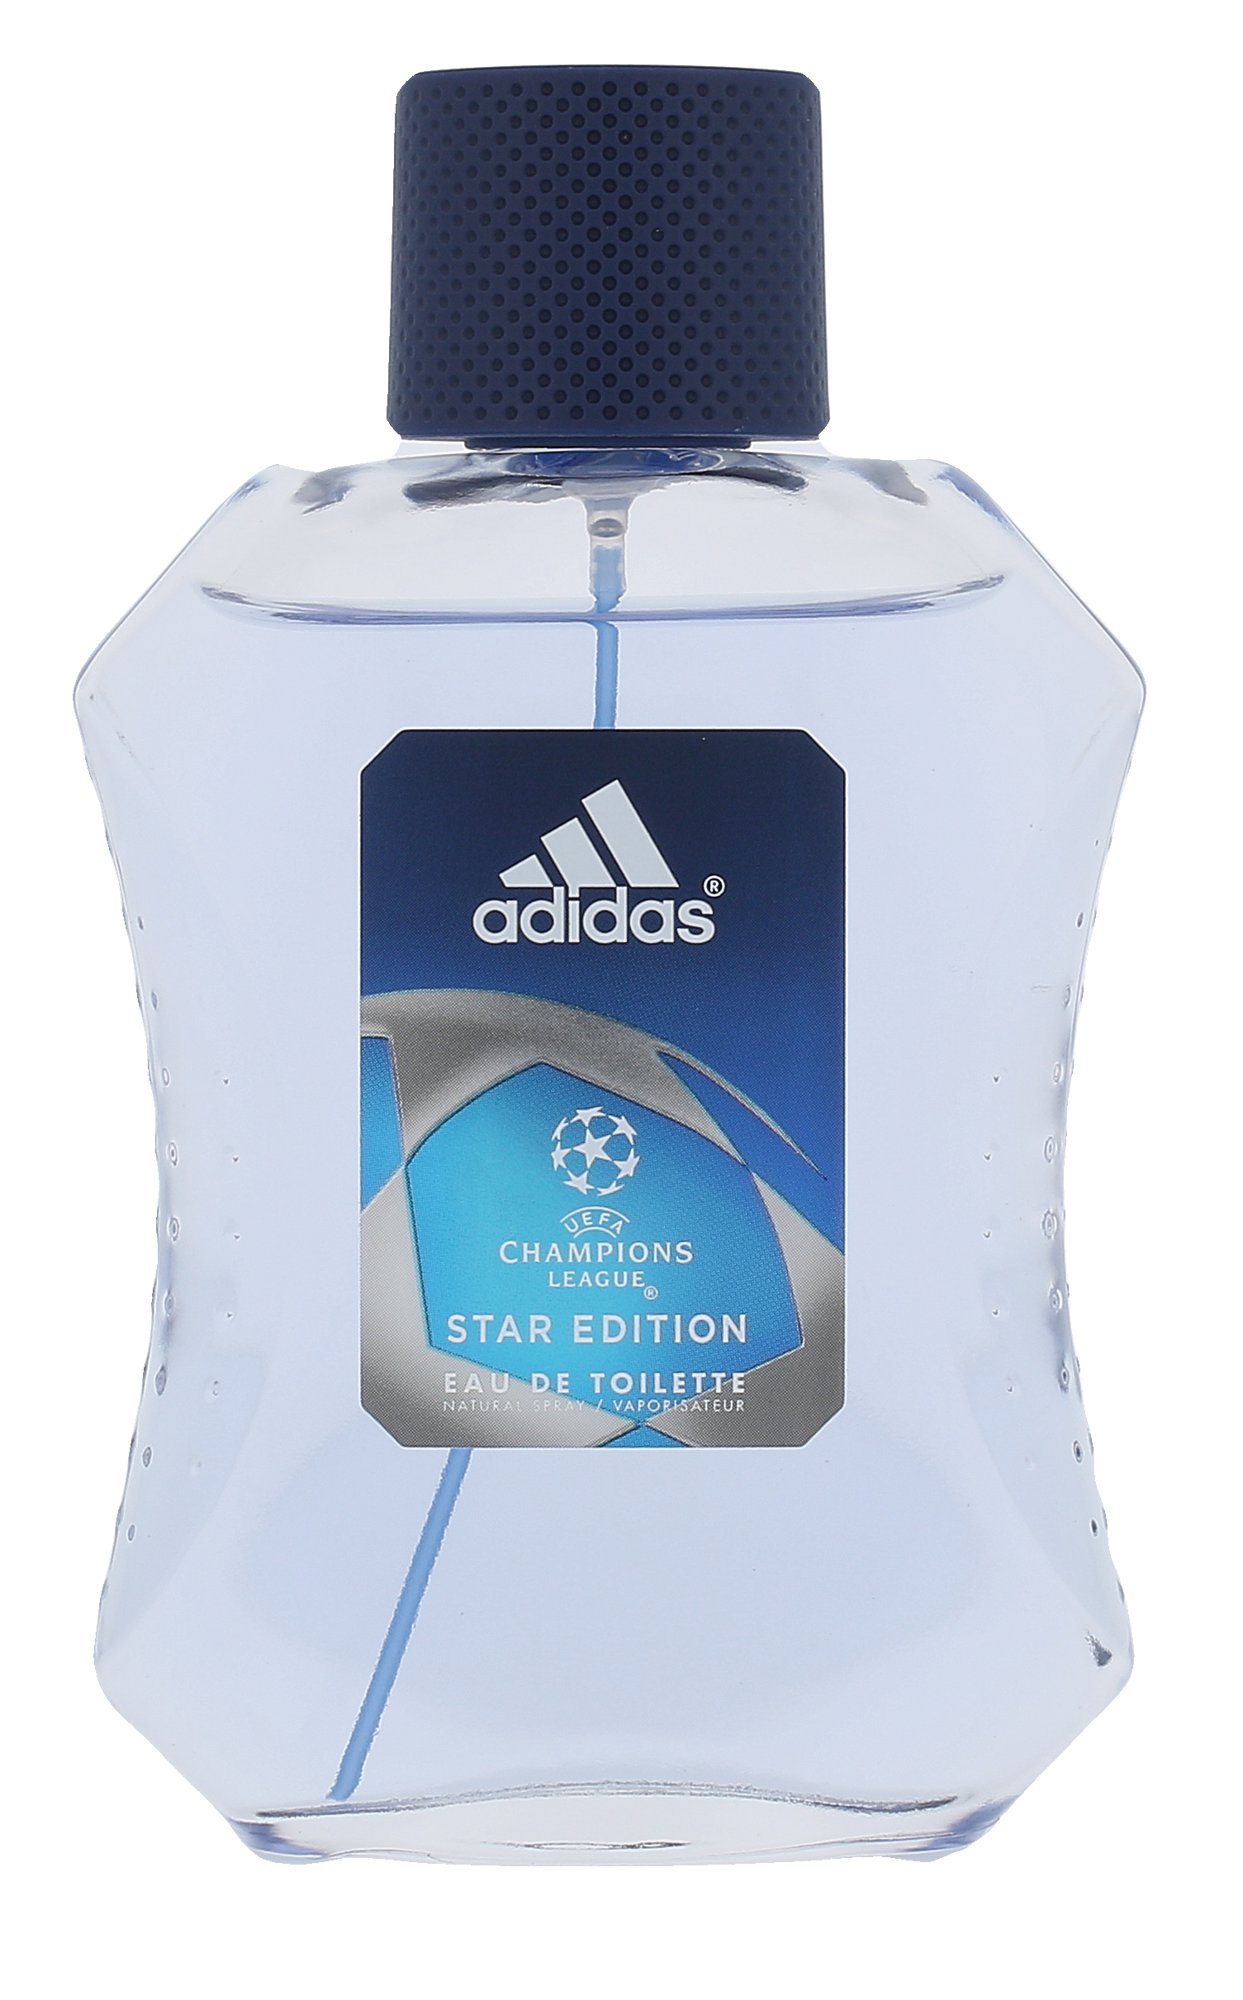 Adidas UEFA Champions League Star Edition, EDT 100ml